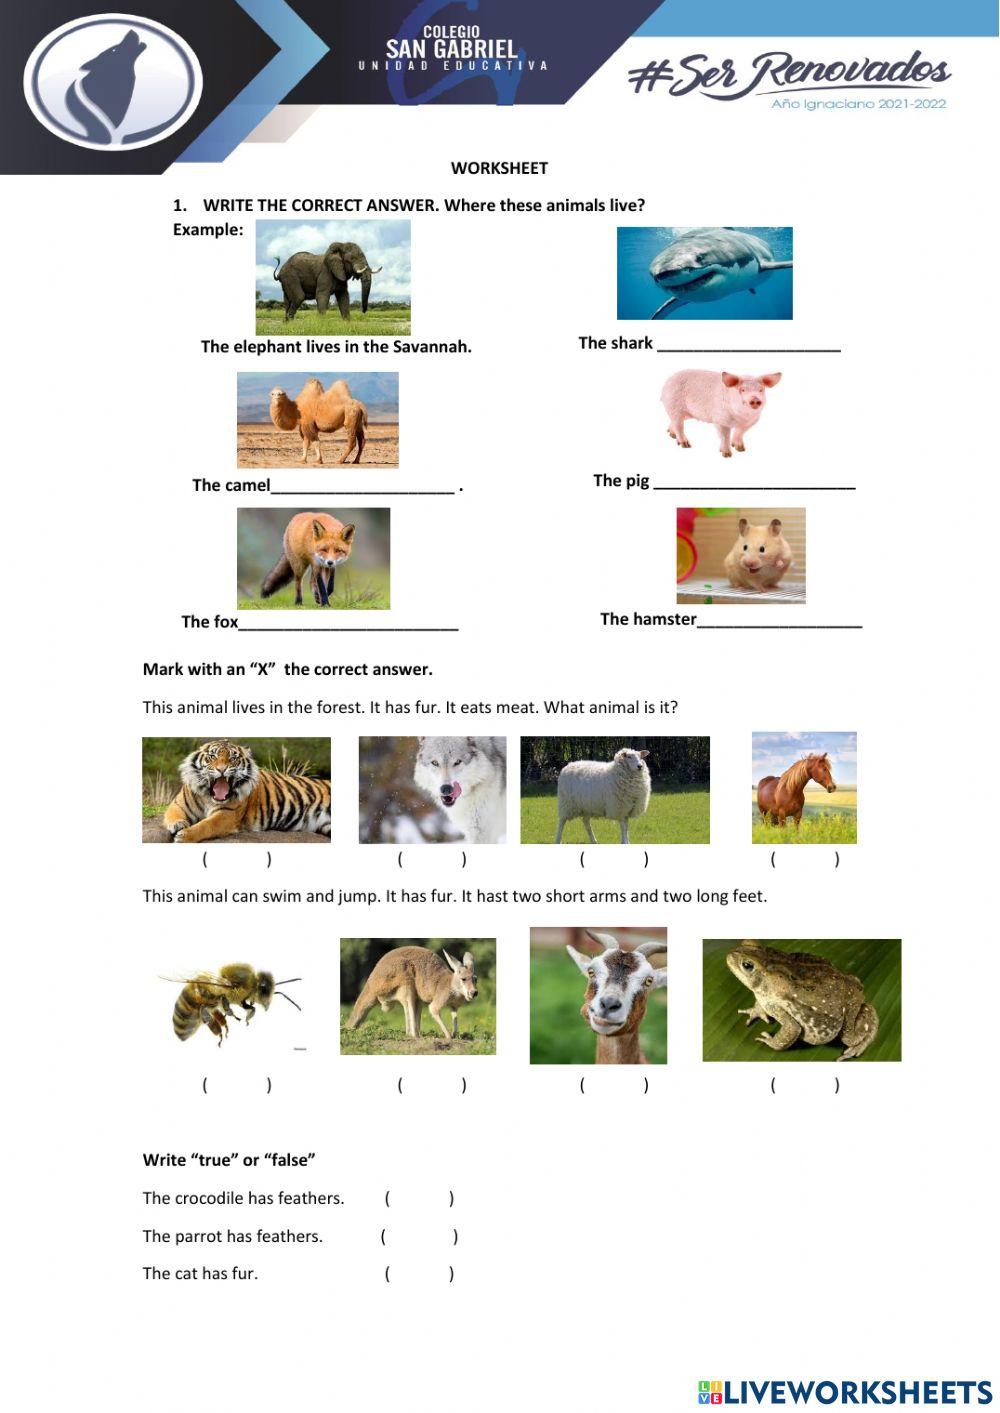 Characteristics of animals II